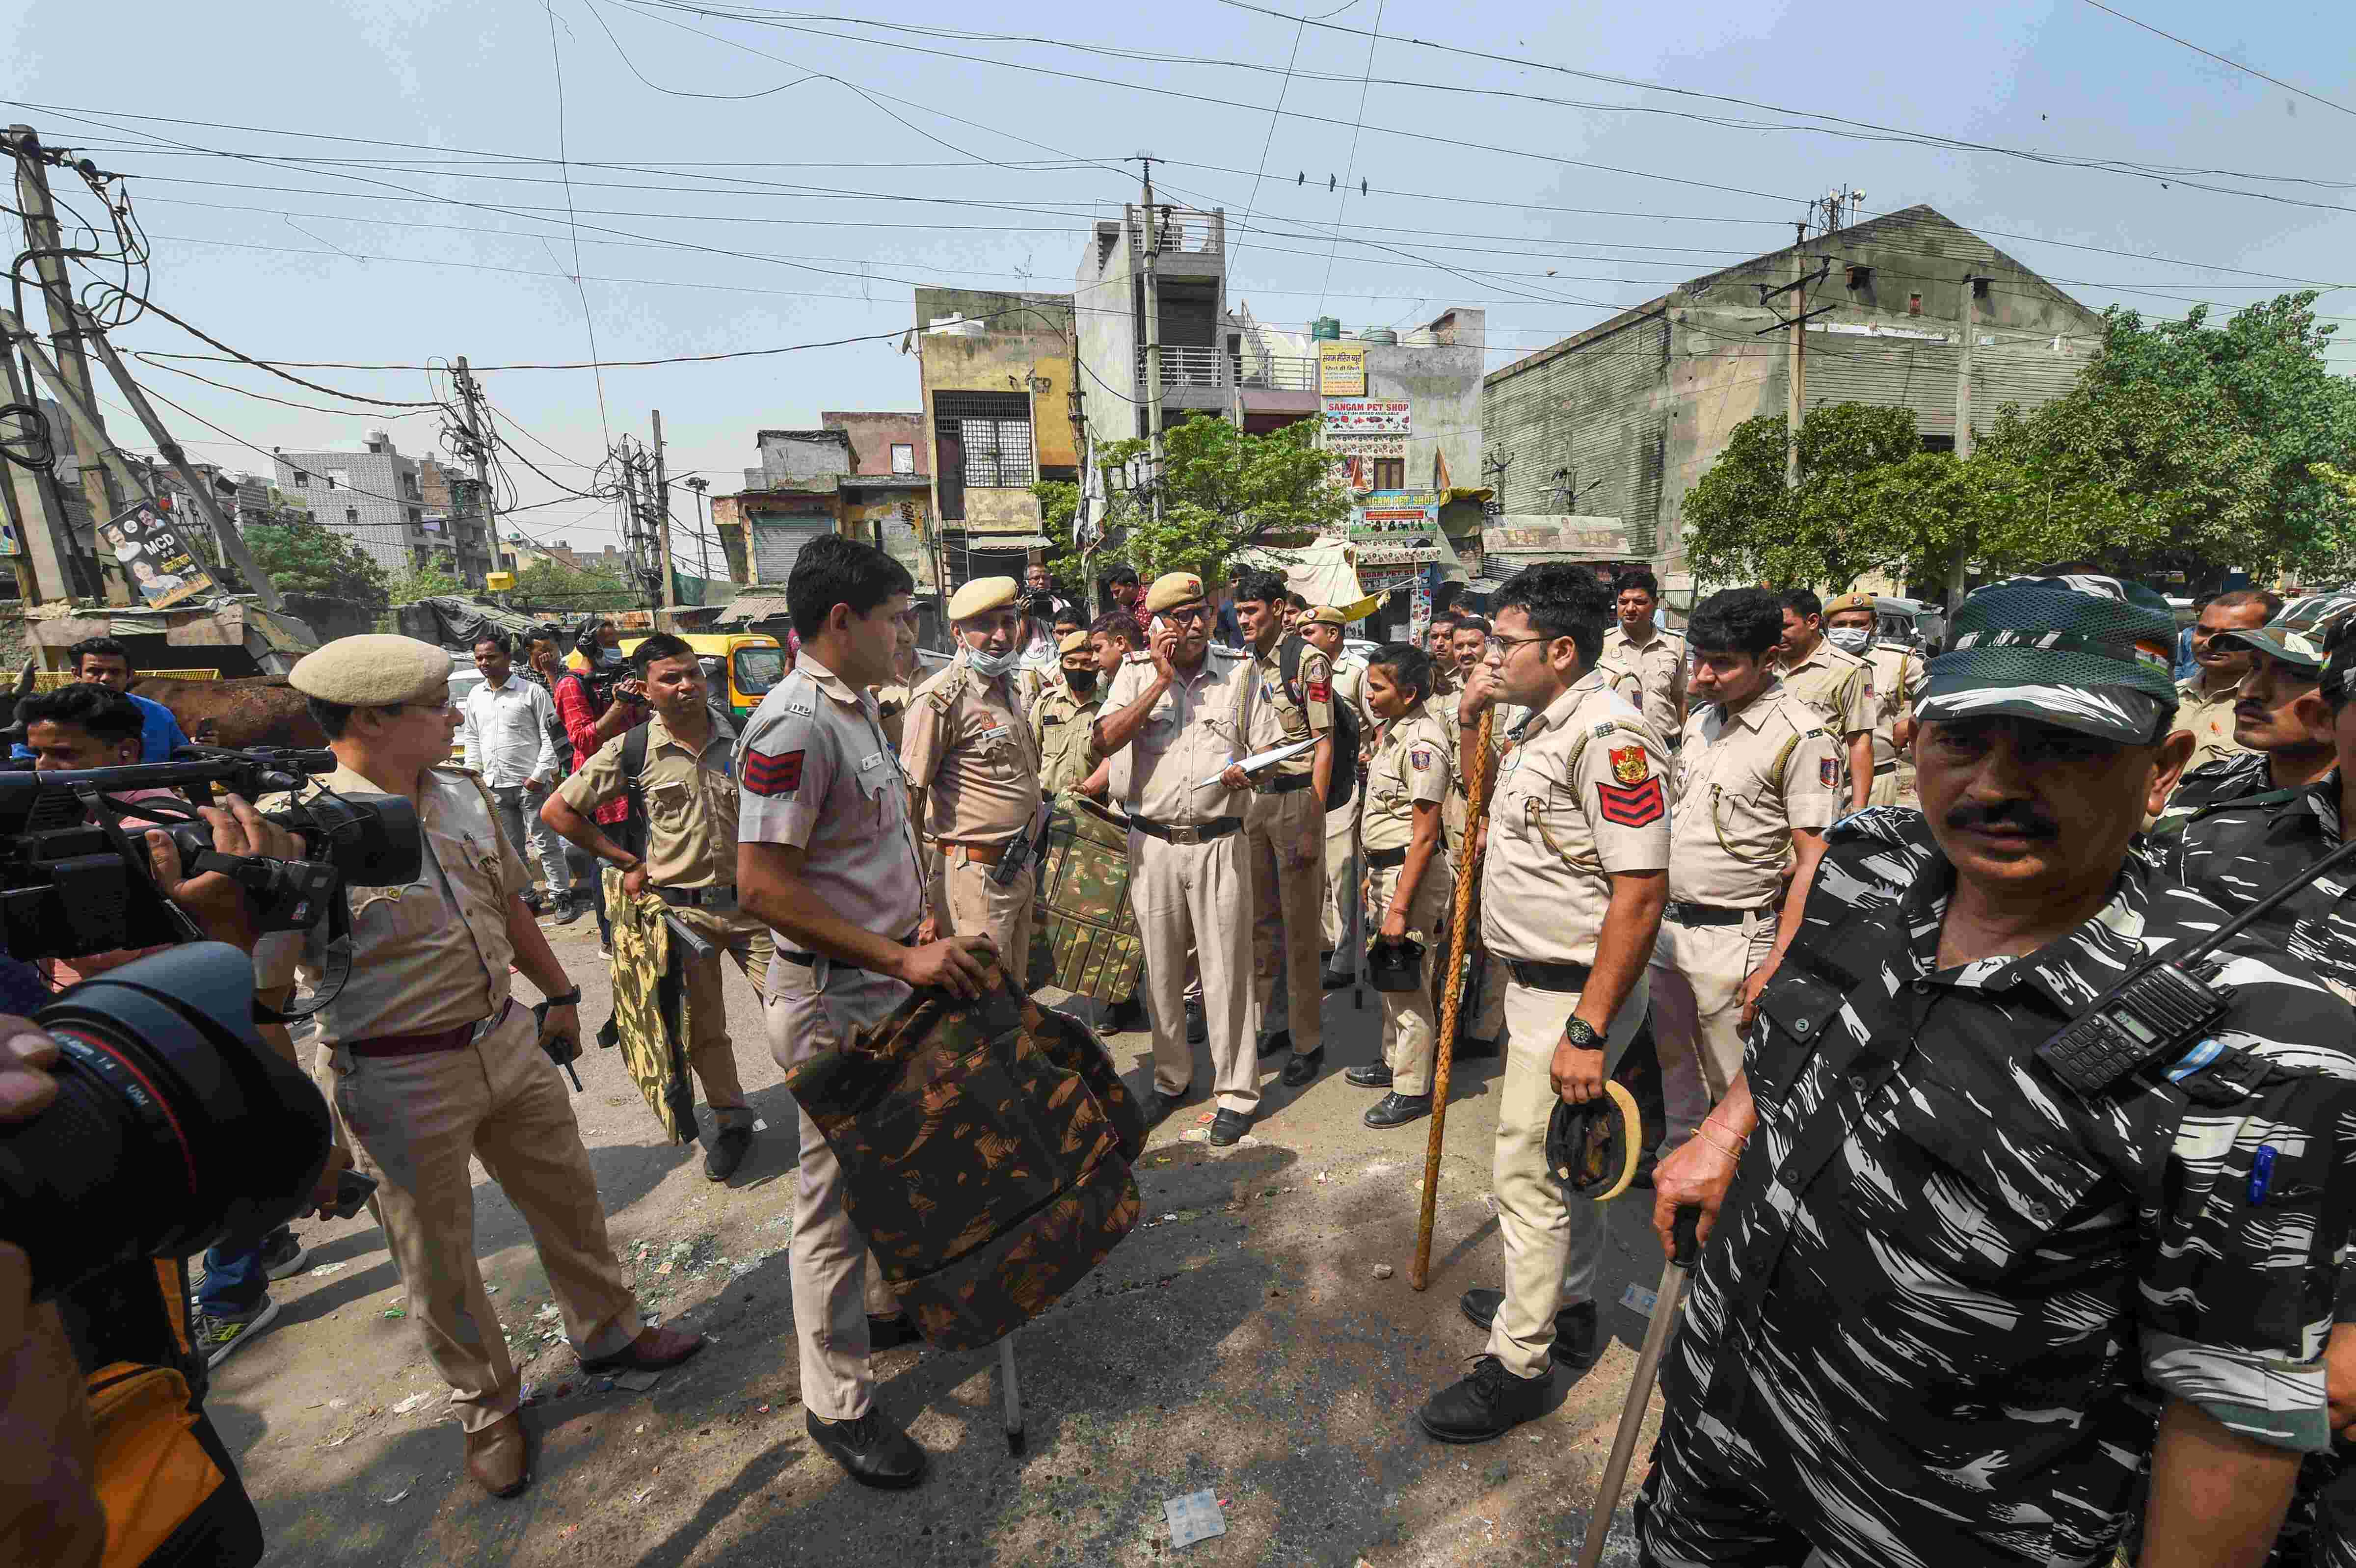 Shops bulldozed in Jahangirpuri, SC intervenes to stop demolition